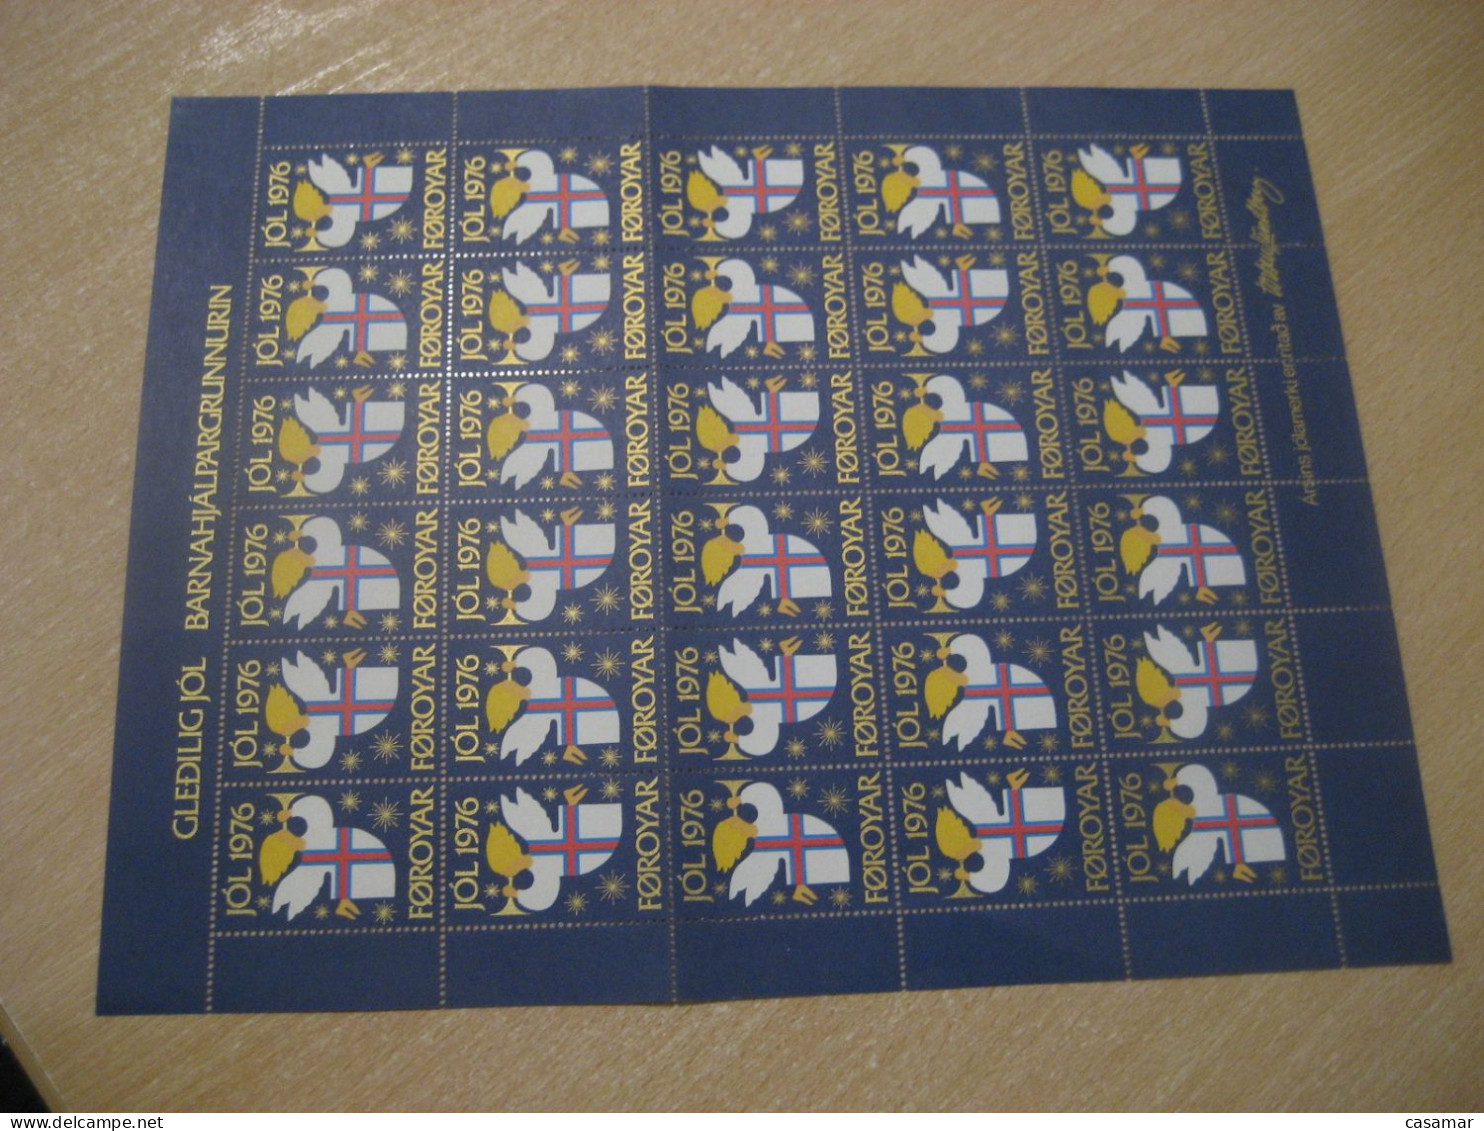 FAROE ISLANDS 1976 Flag Merry Christmas Sheet Bloc 30 Poster Stamp Vignette DENMARK Label Children Aid - Faroe Islands